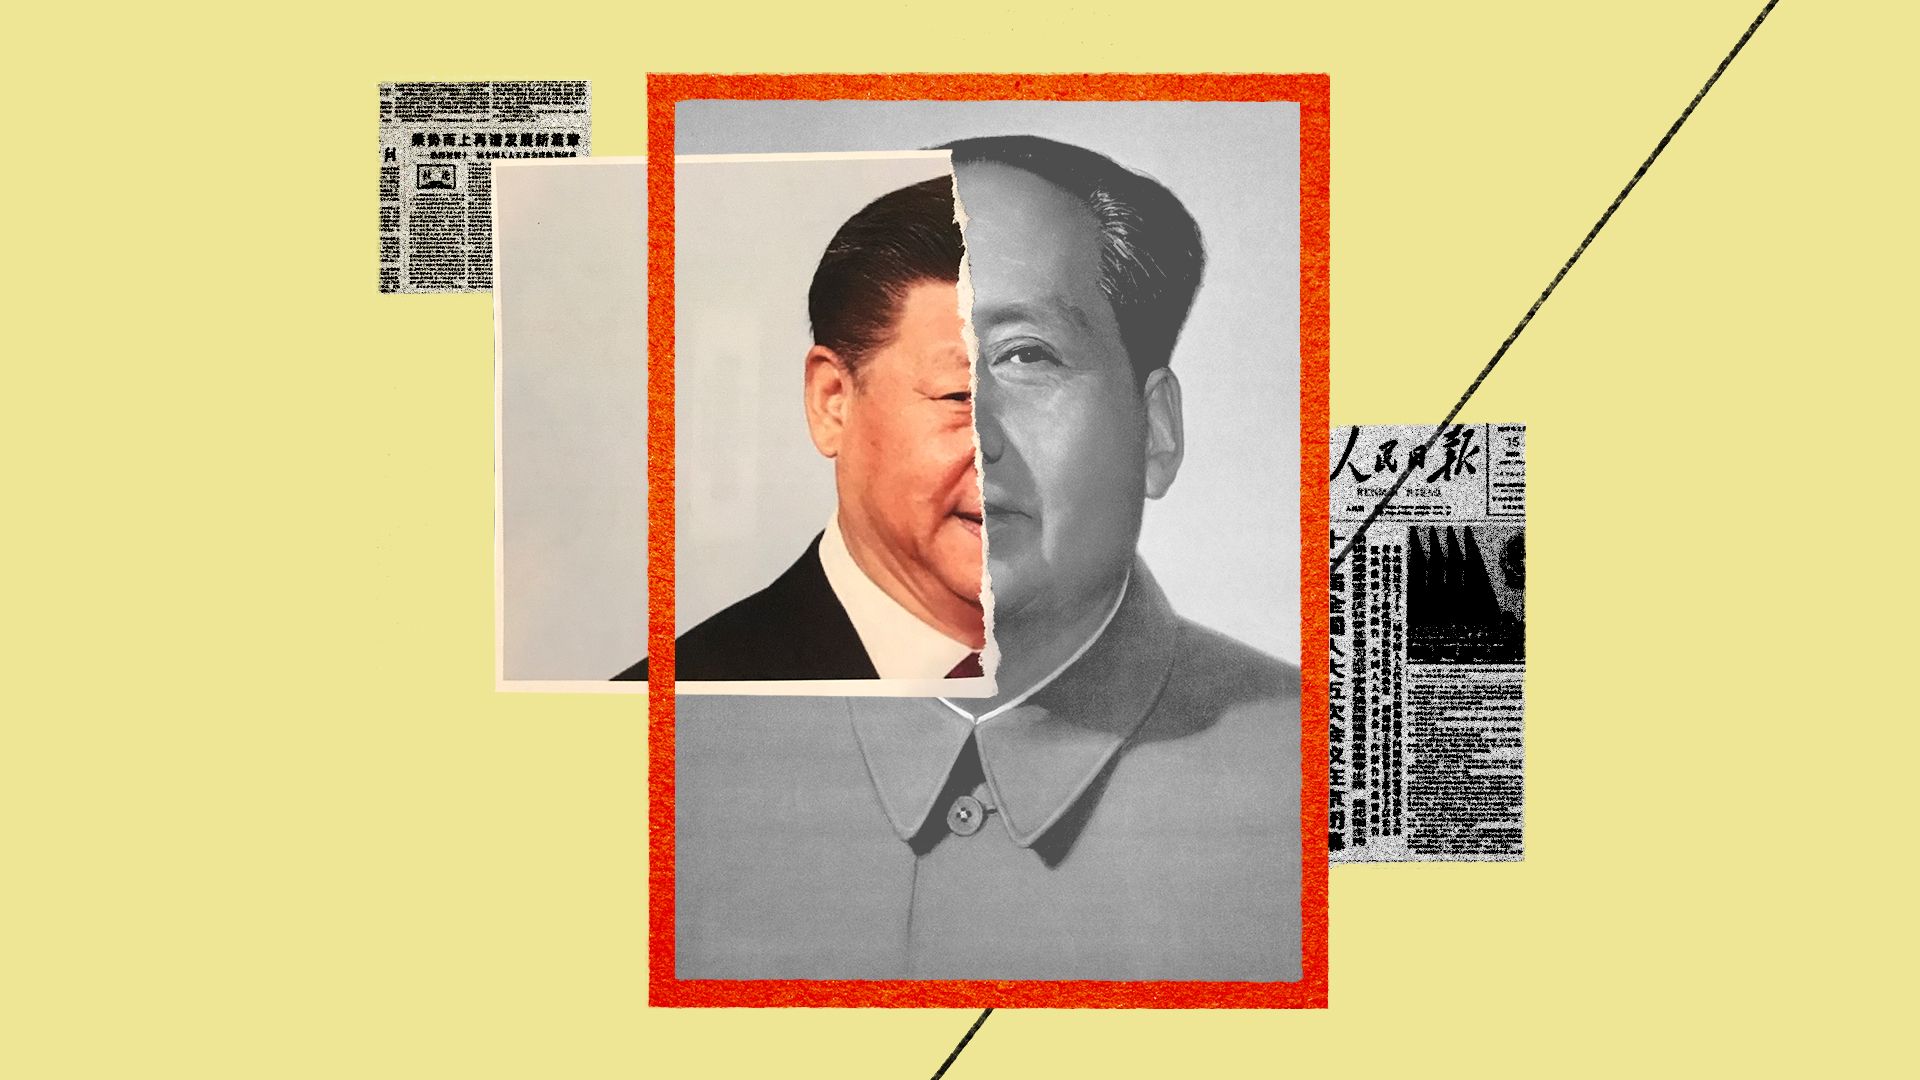 Illustration of Mao/Xi photos merged together